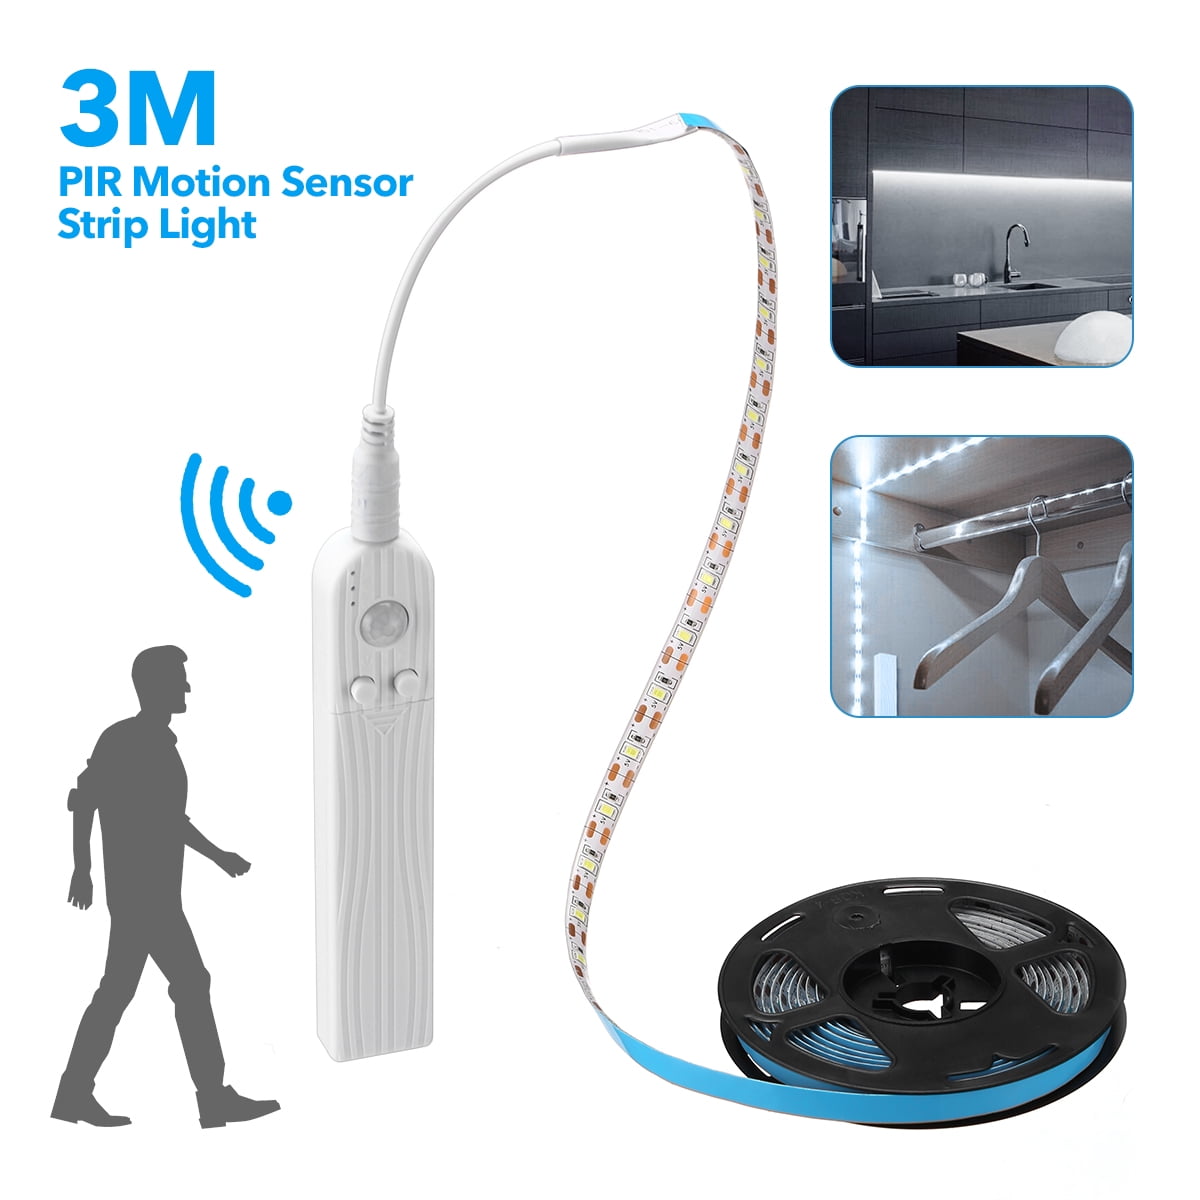 Wireless PIR Motion Sensor waterproof LED Wardrobe Under Bed Strip night Light